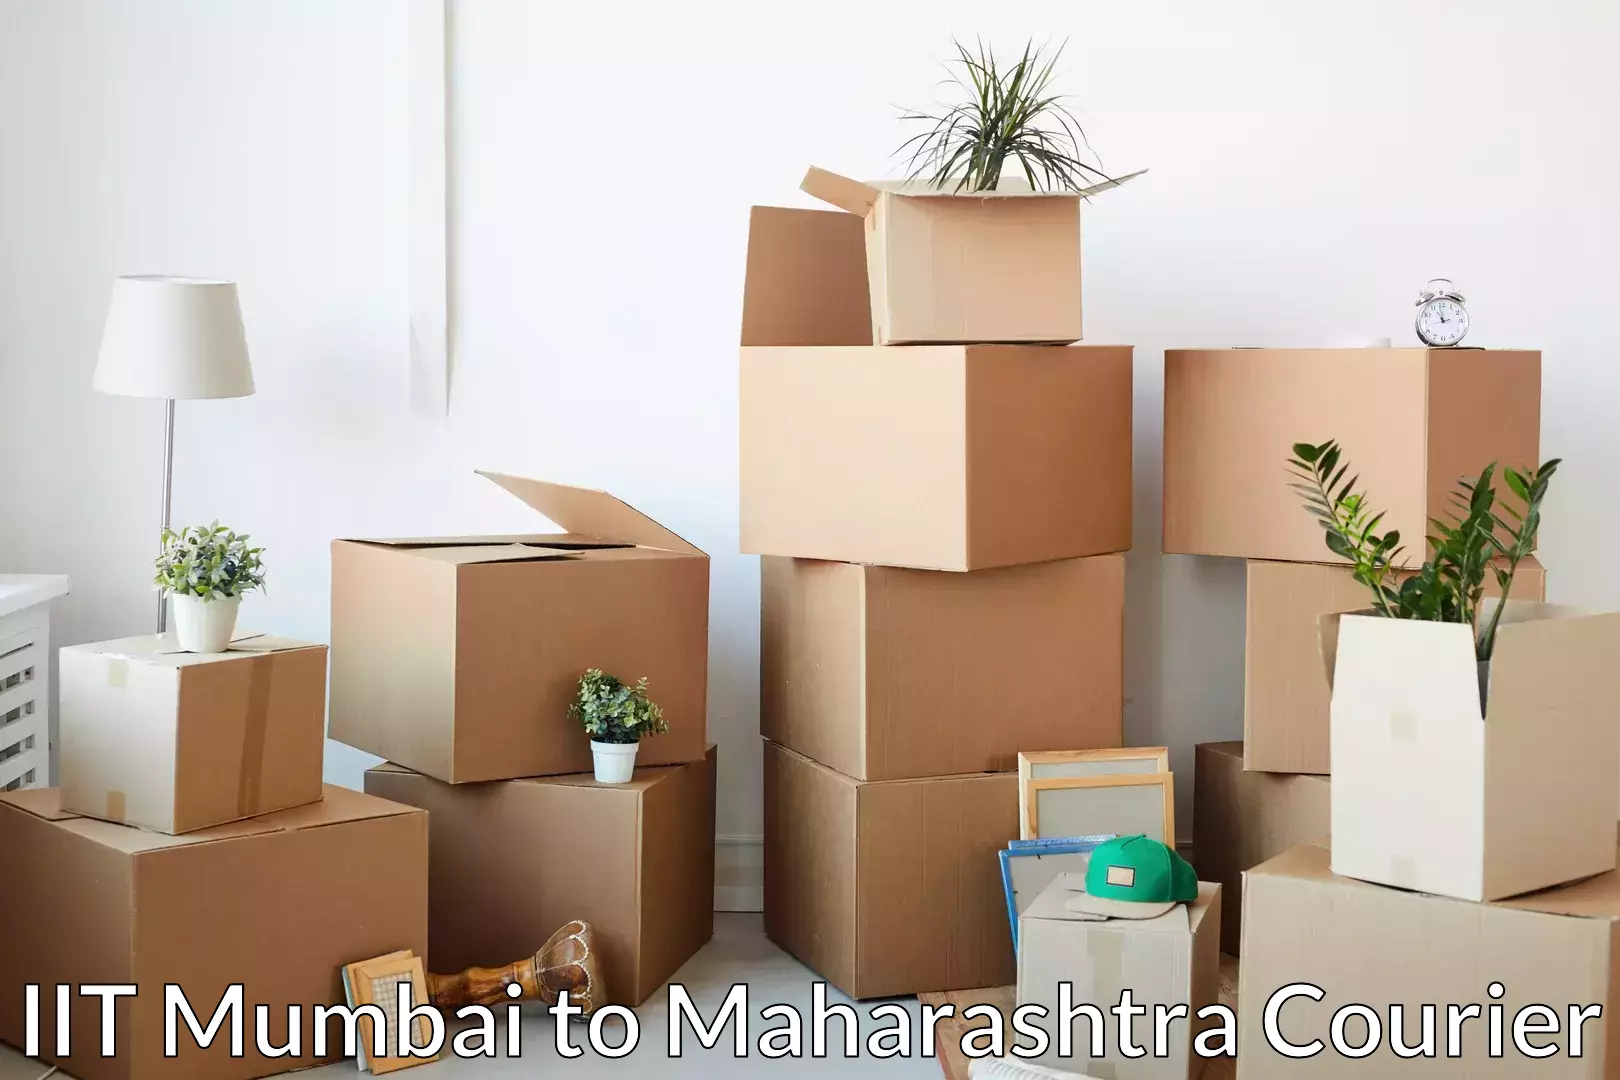 Trusted relocation experts IIT Mumbai to Shirpur